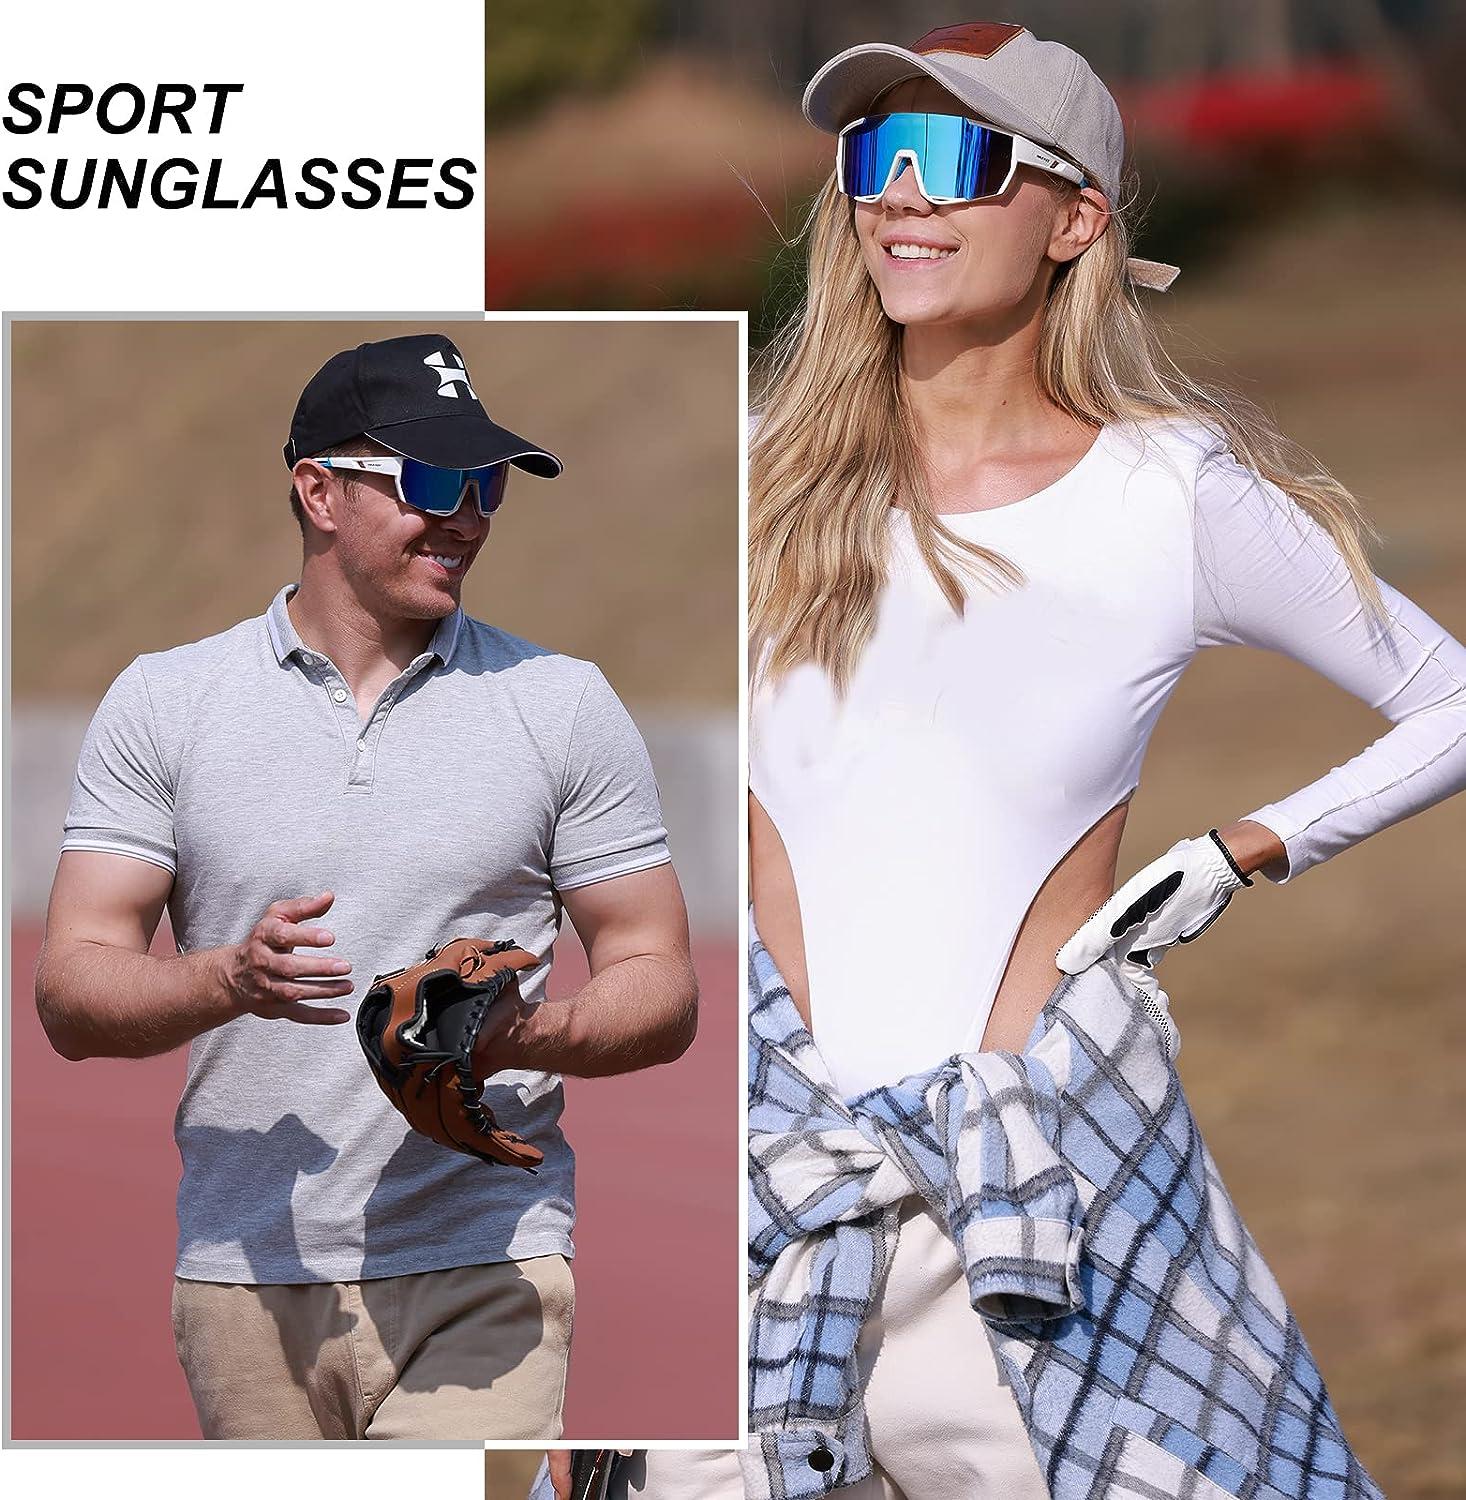 HAAYOT Polarized Cycling Glasses,Baseball Sunglasses for Men Women